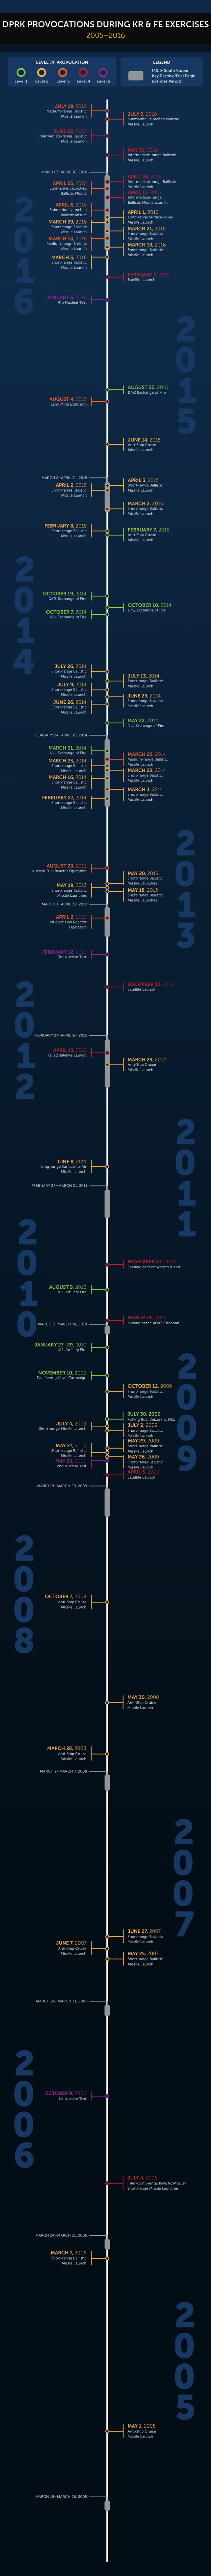 BP_Timeline_2005-2016